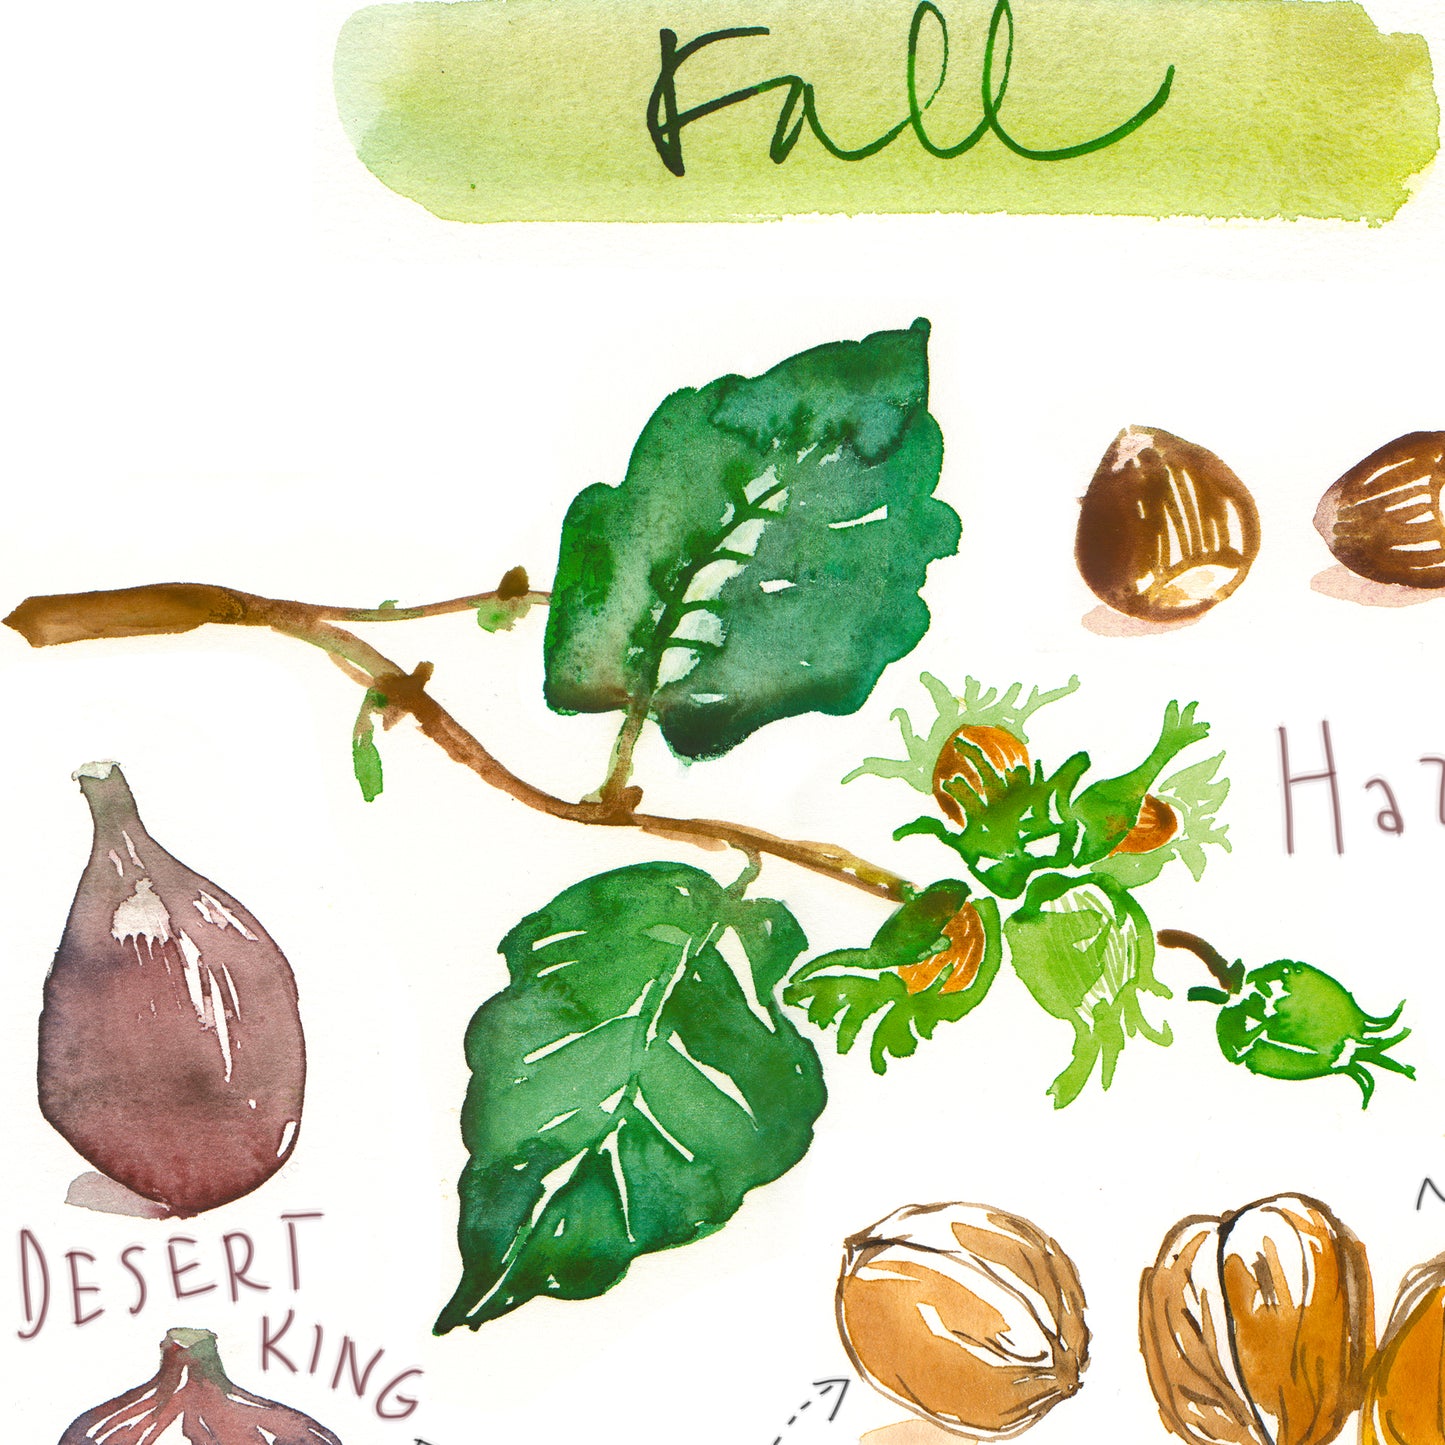 Fall fruits - In English